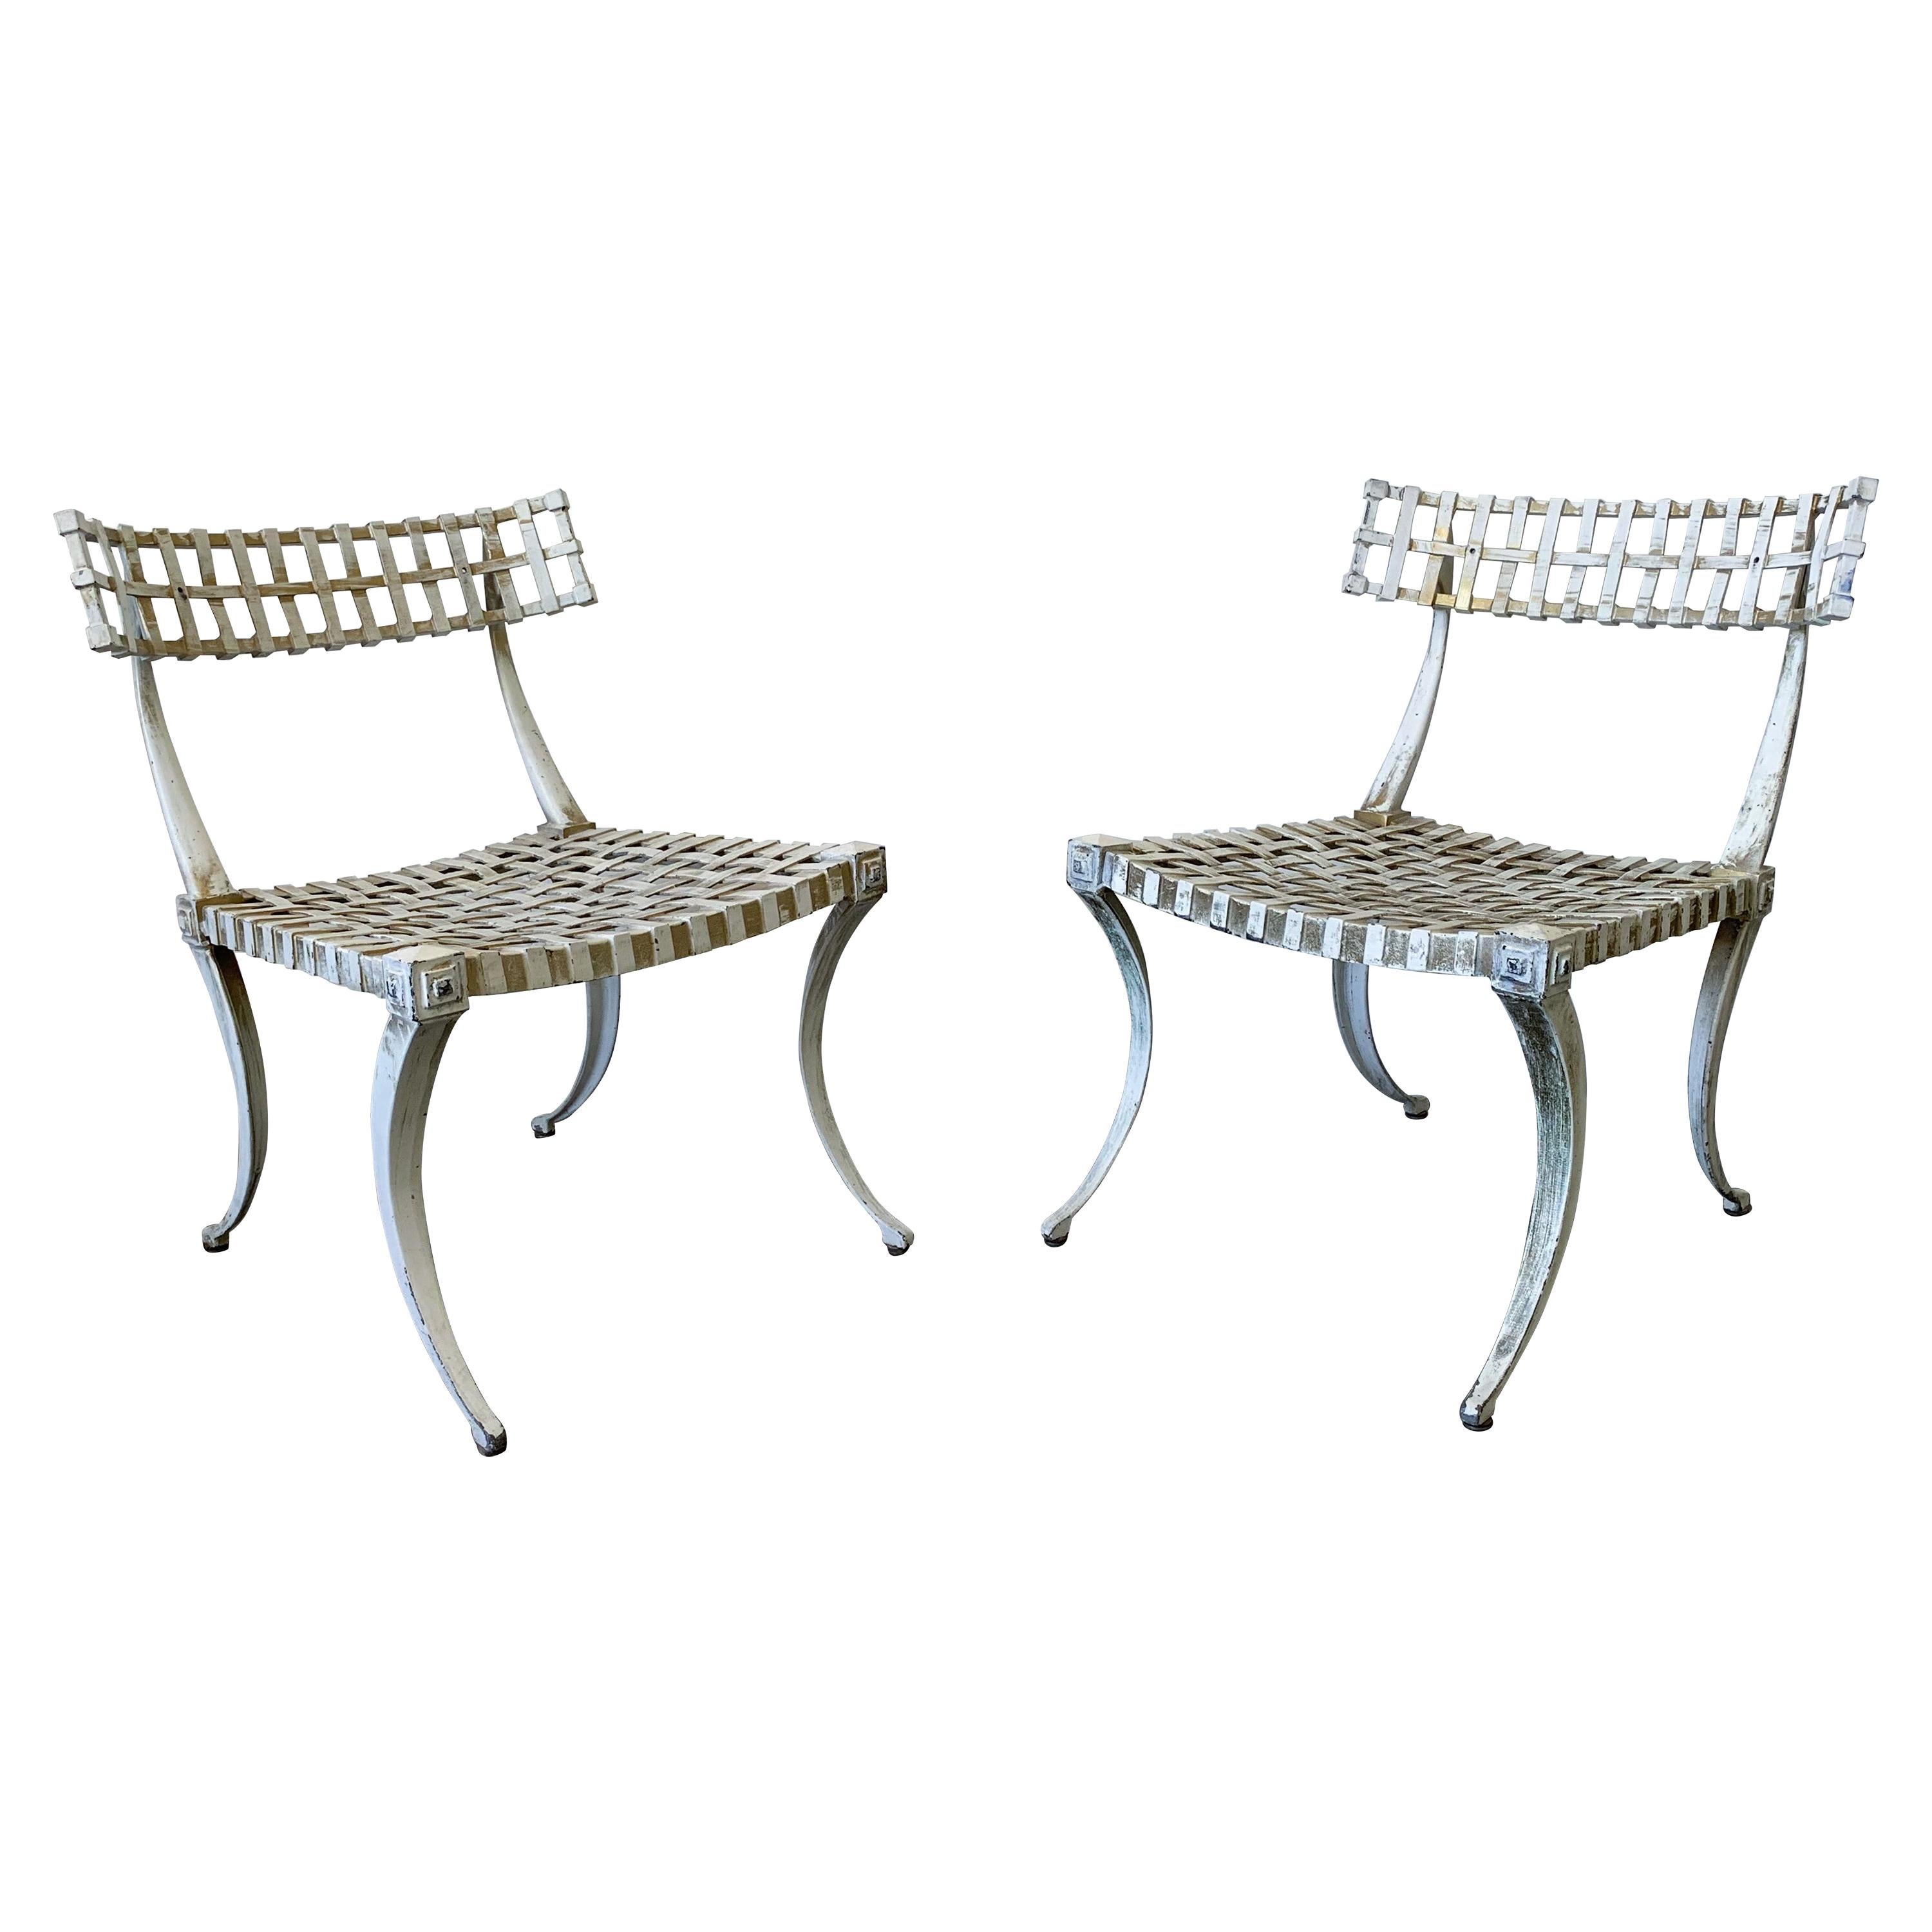 Thinline Aluminum Klismos Chairs, A Pair, 1960s